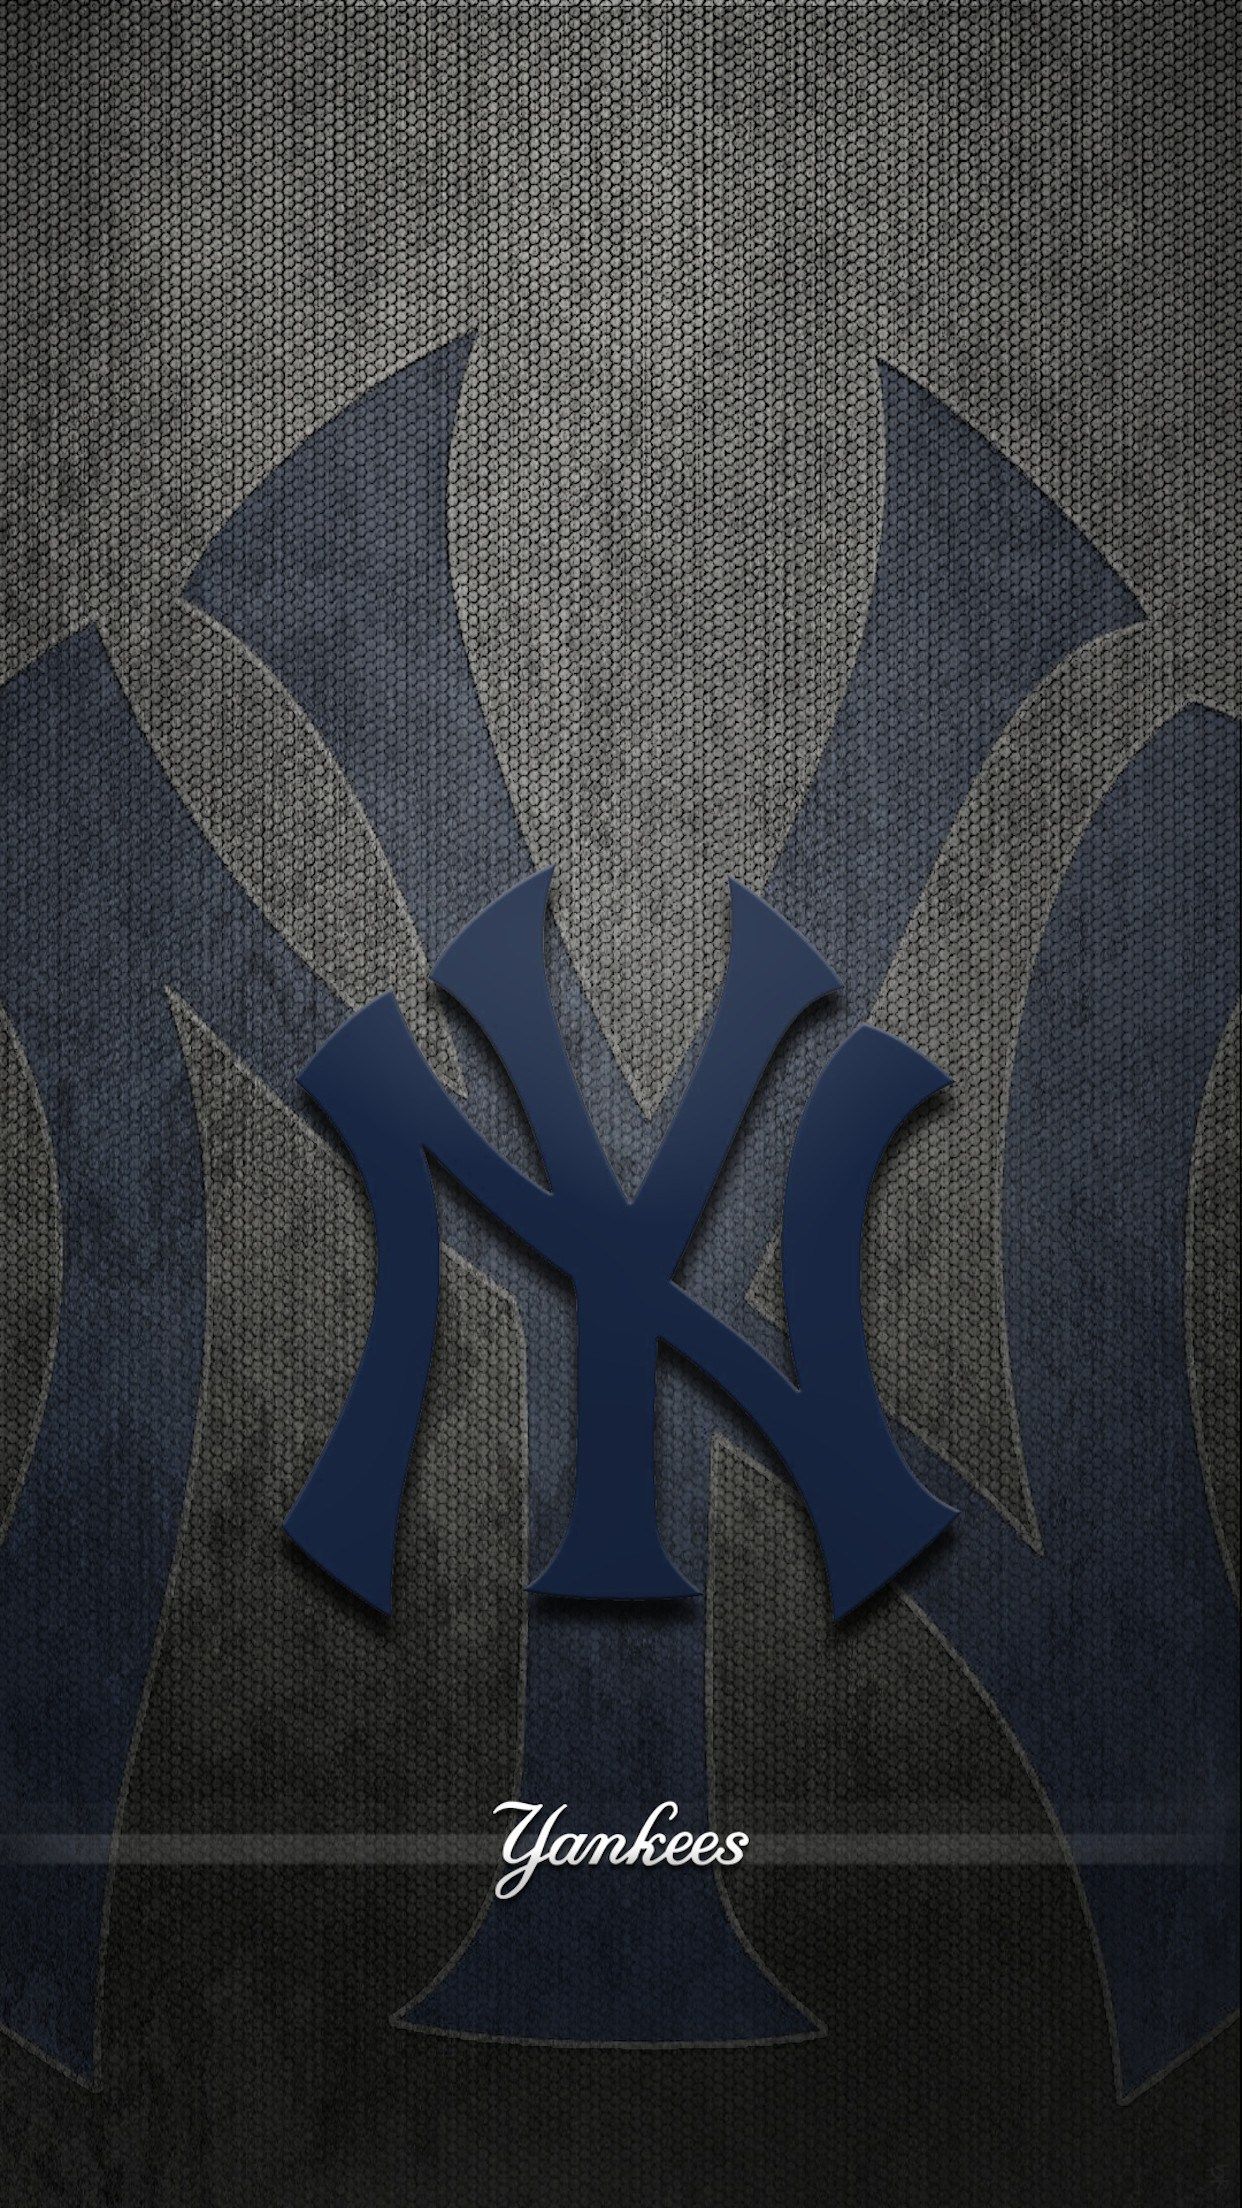 Yankees Iphone 6 Wallpapers